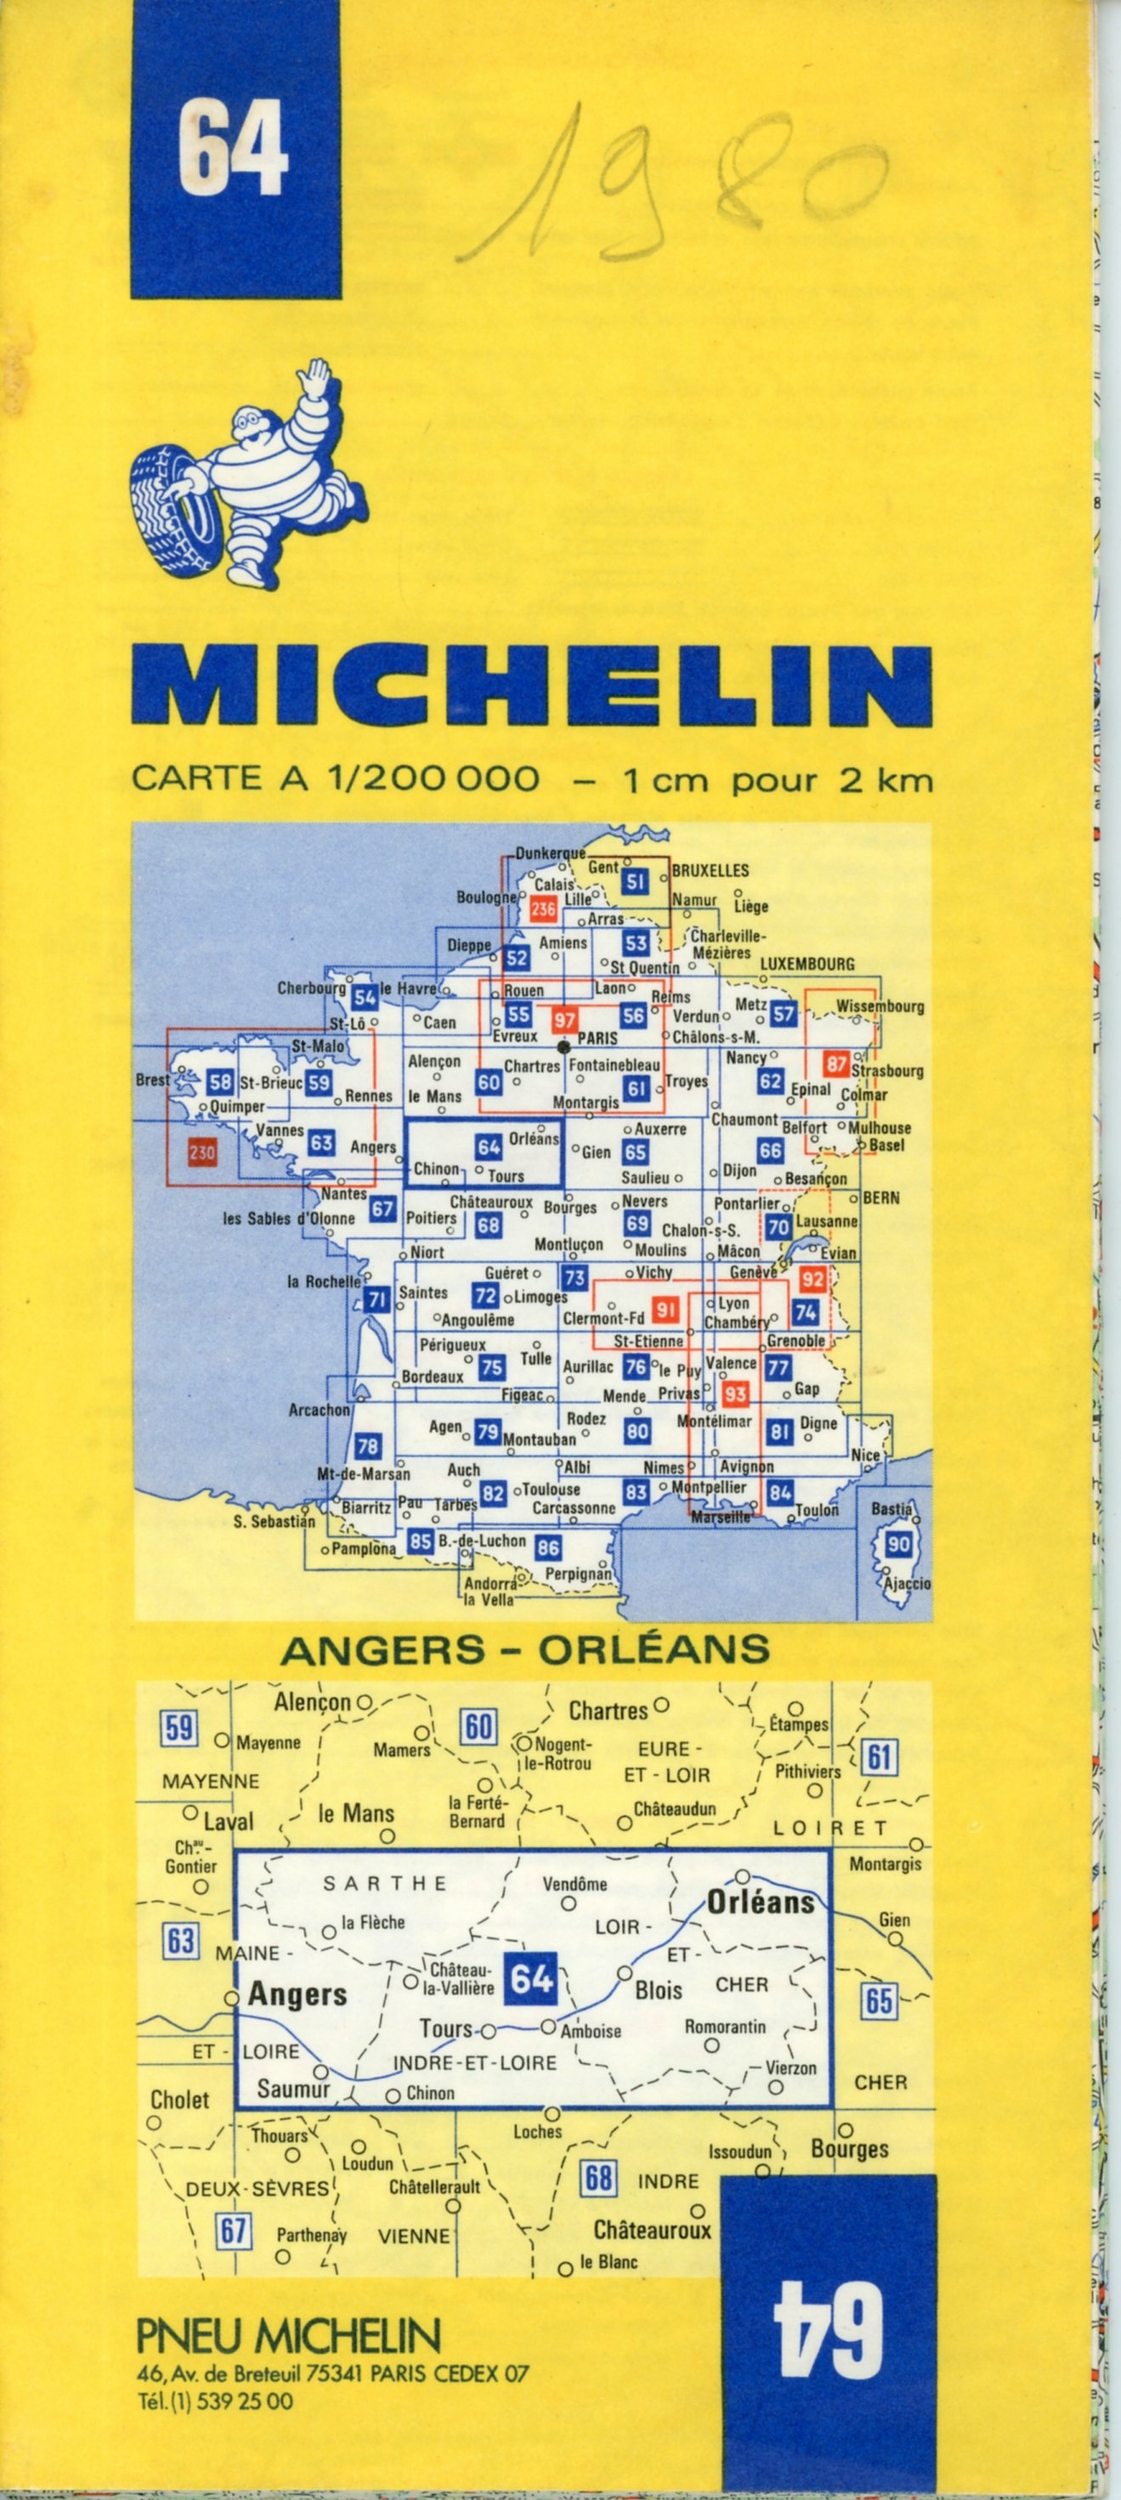 CARTE-ROUTIÈRE-MICHELIN-64-1980-LEMASTERBROCKERS-COLLECTION-CARTE-MICHELIN